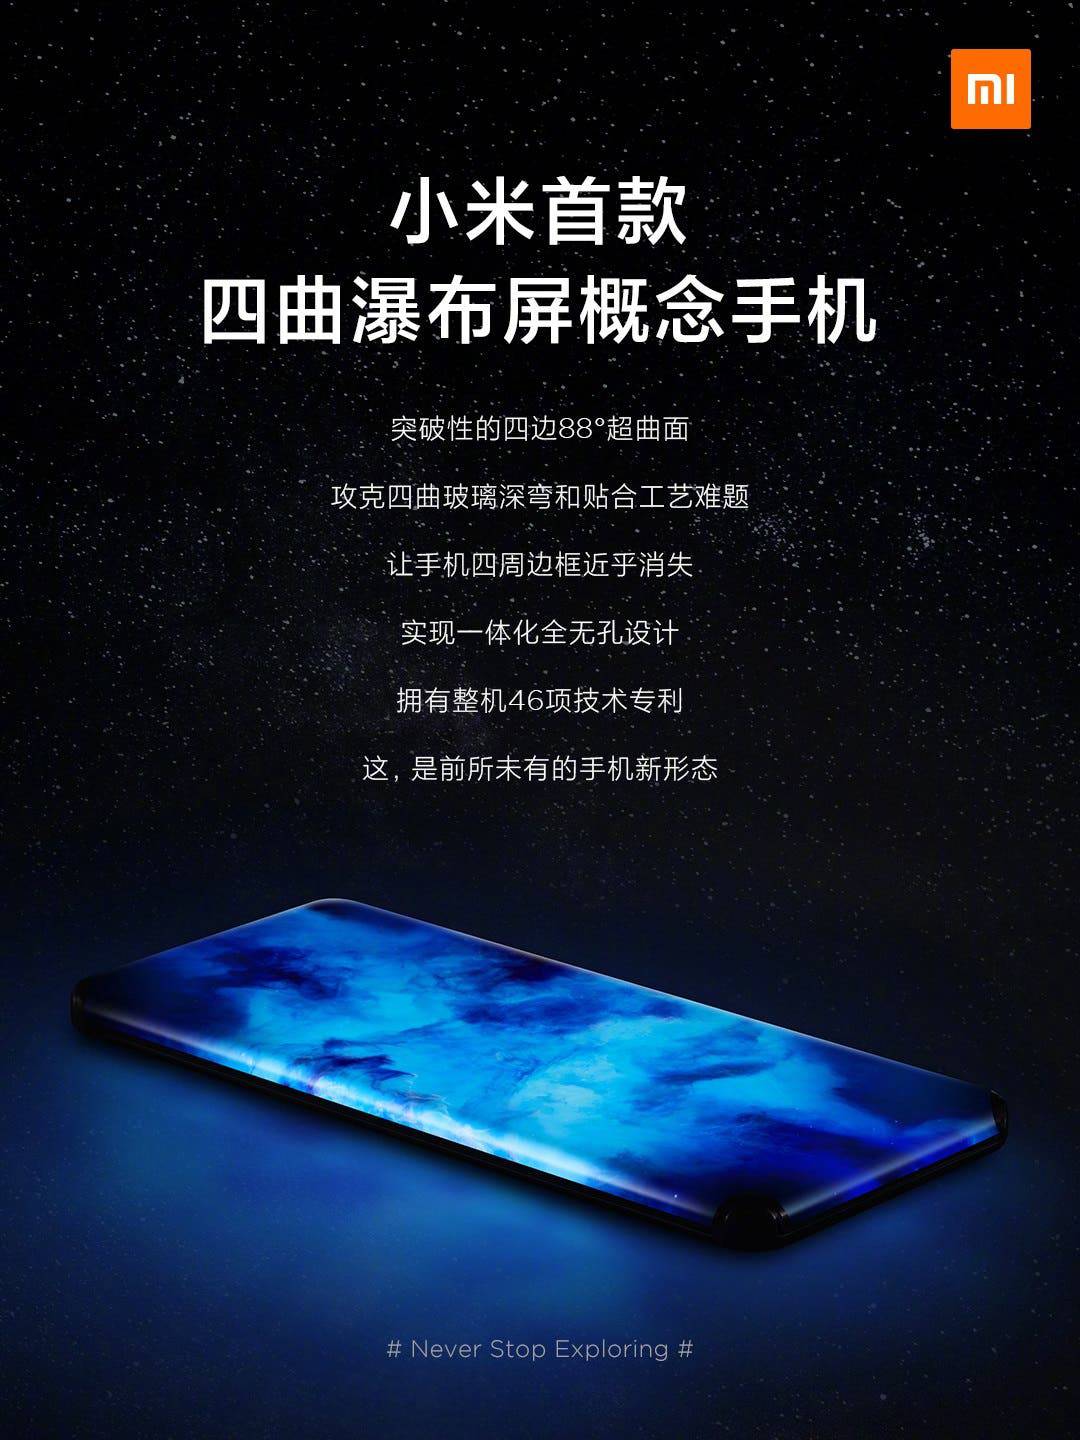 Xiaomi siqu quad-curved concept phone